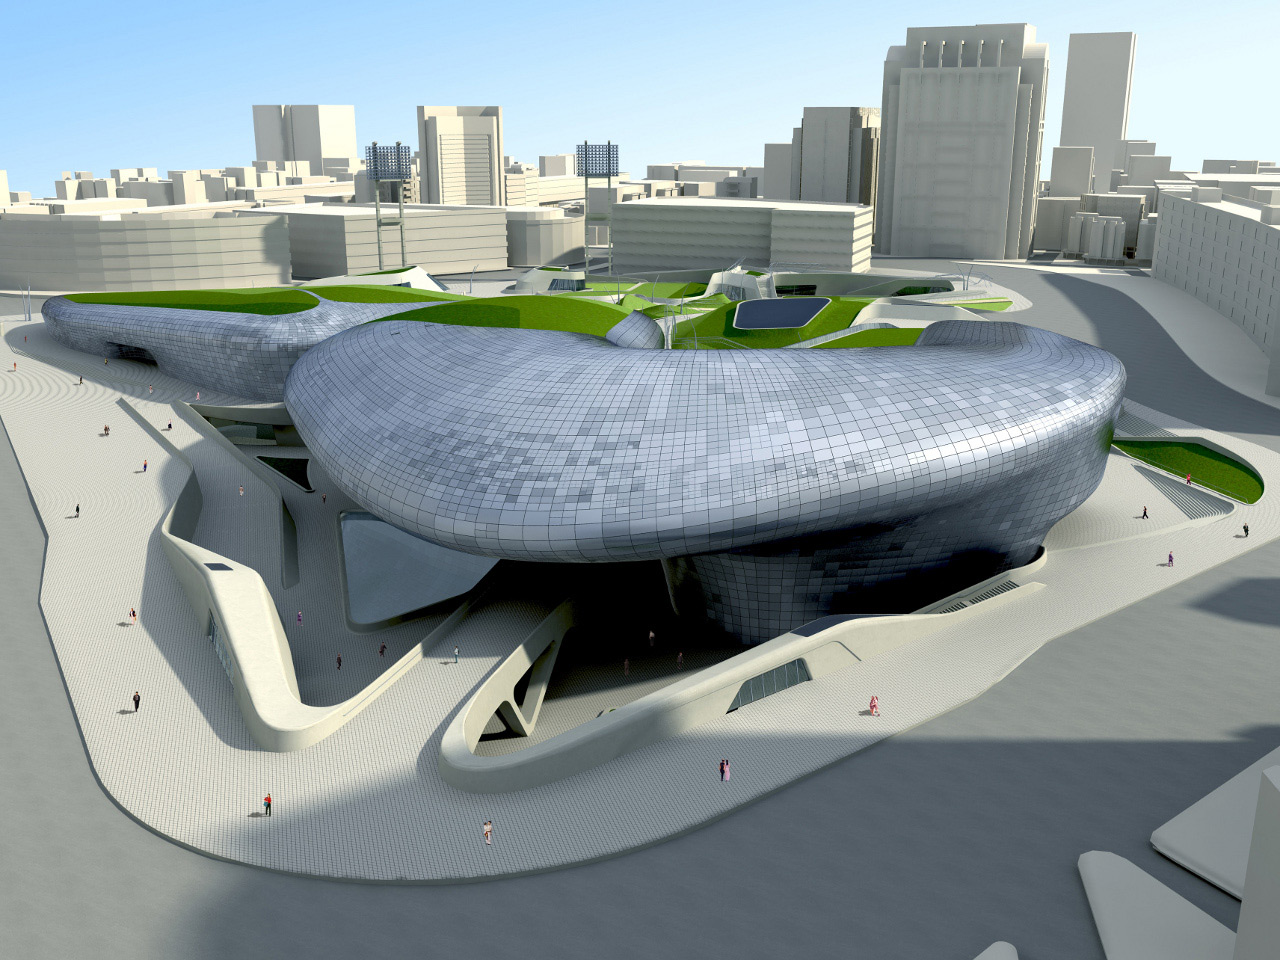 Zaha Hadid's Dongdaemun Design Park and Plazarendering